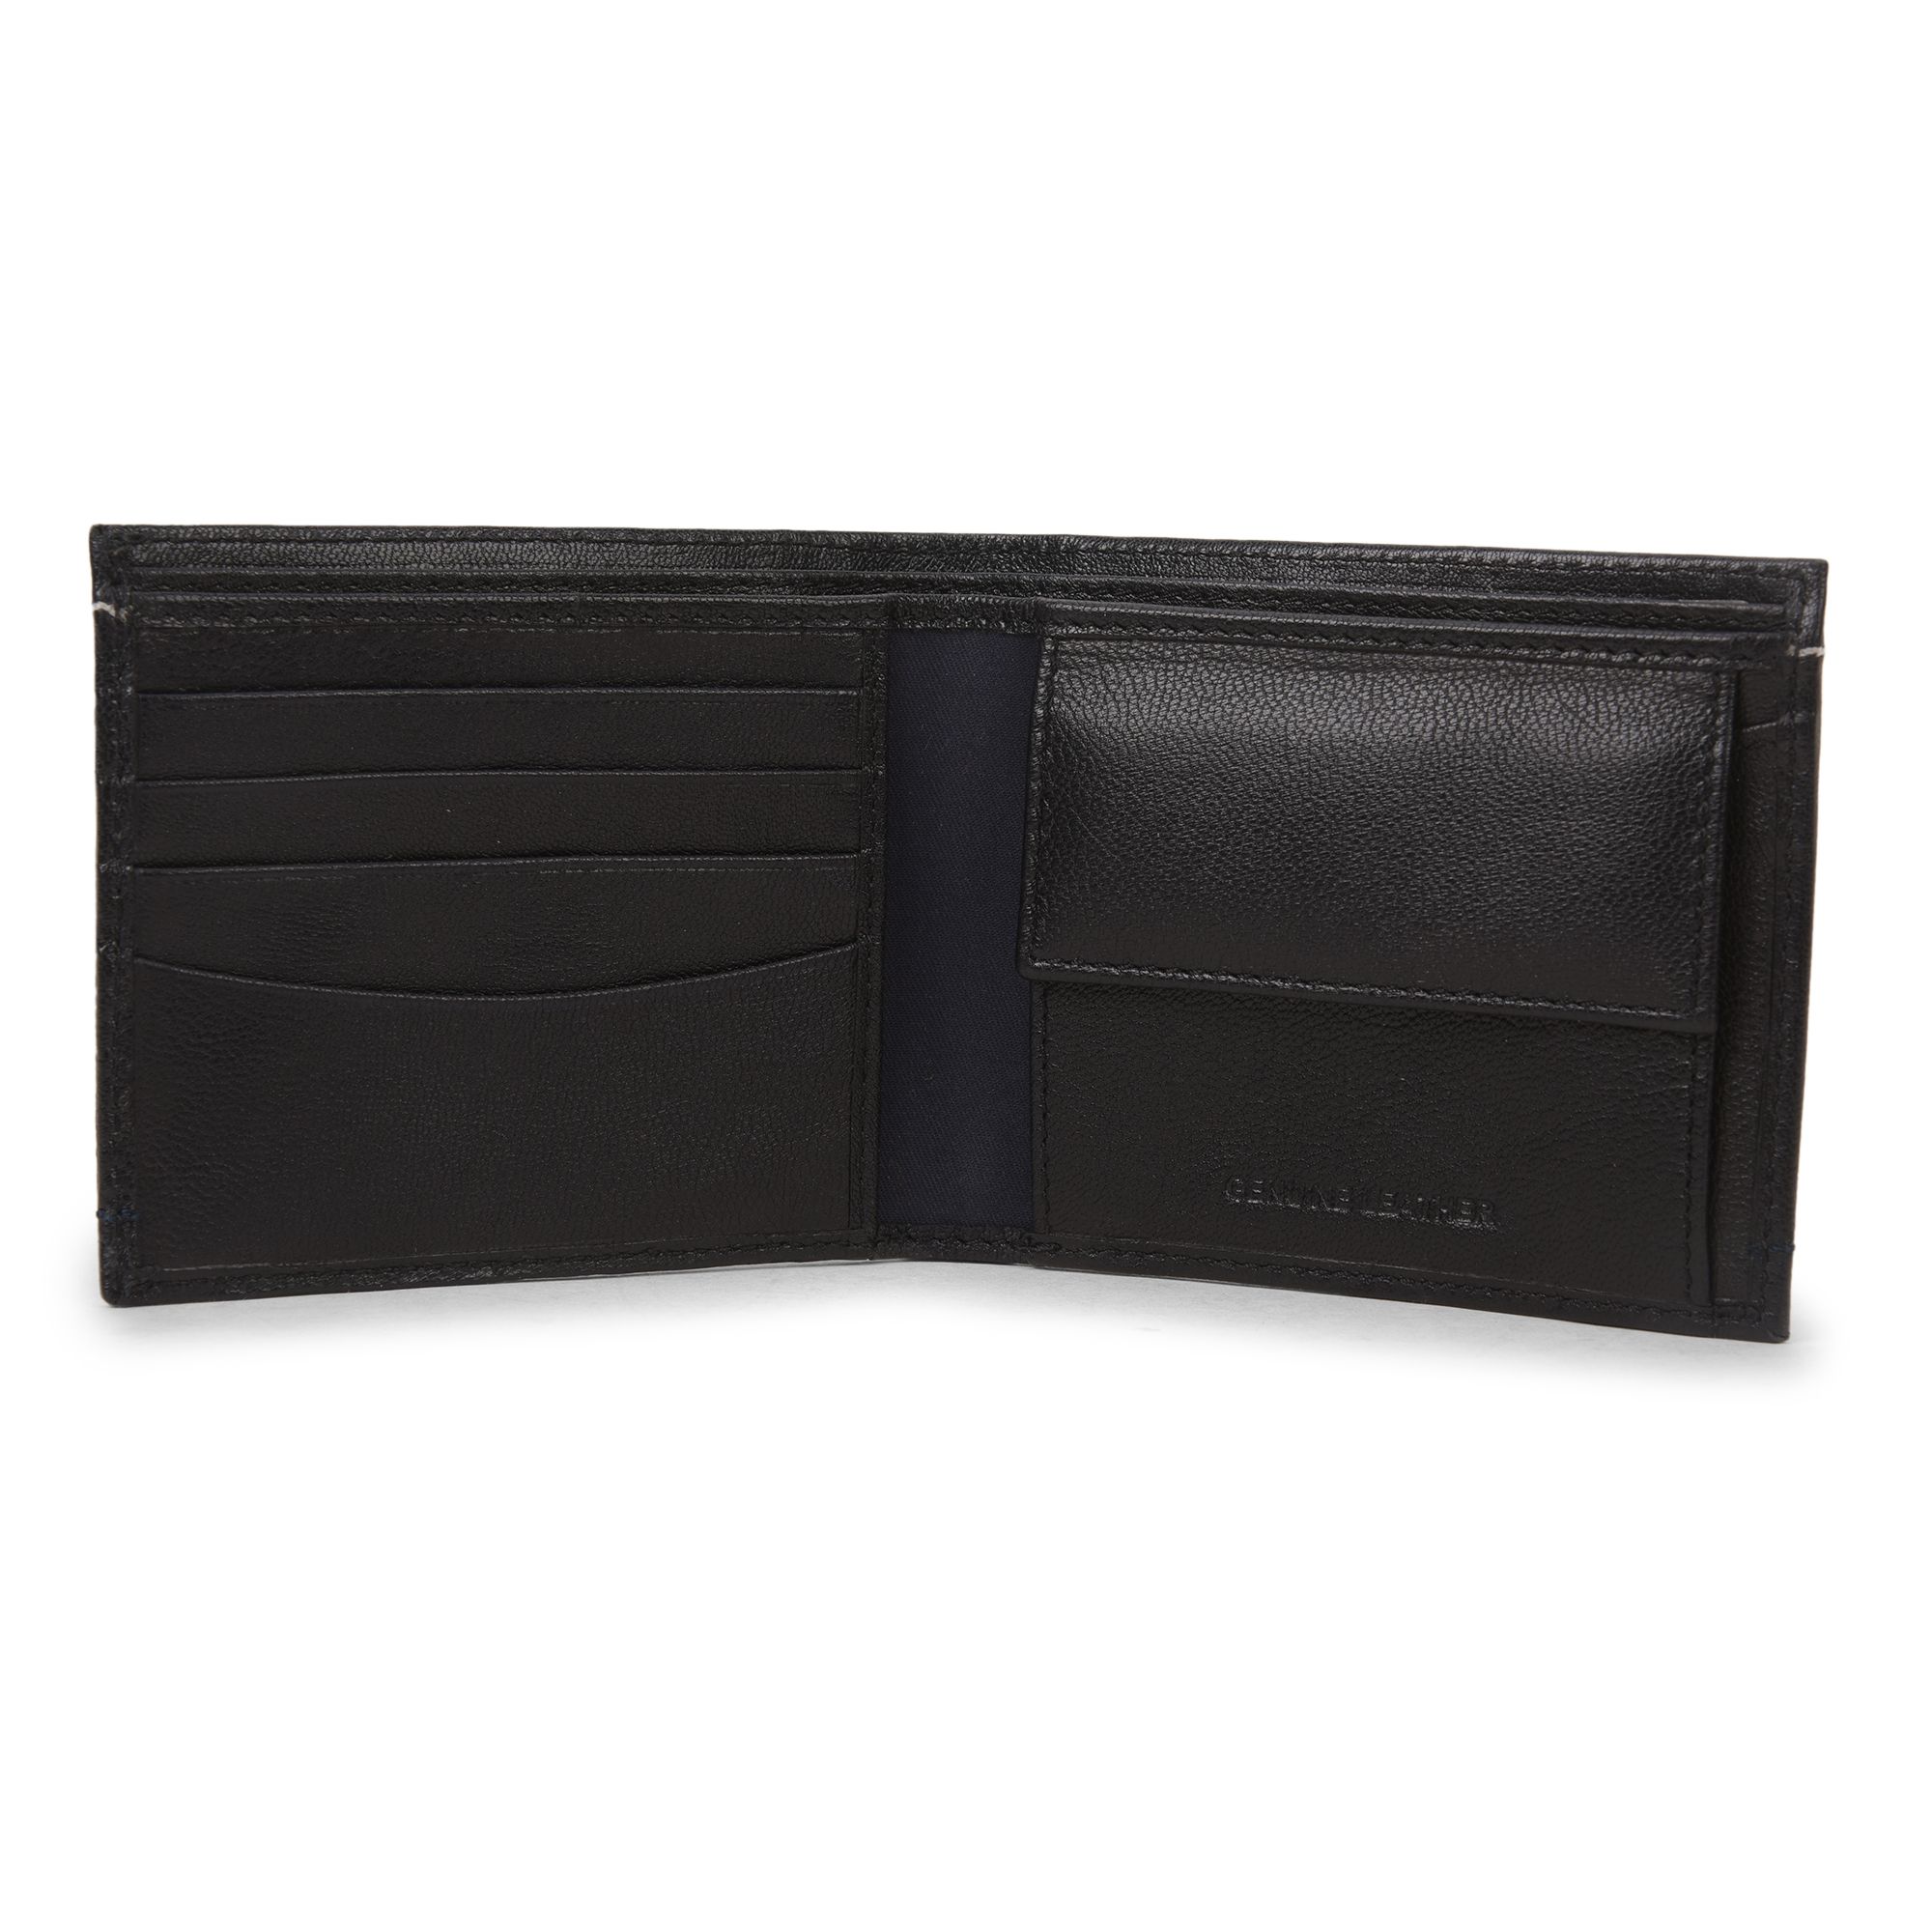 Brown bi-fold leather wallet